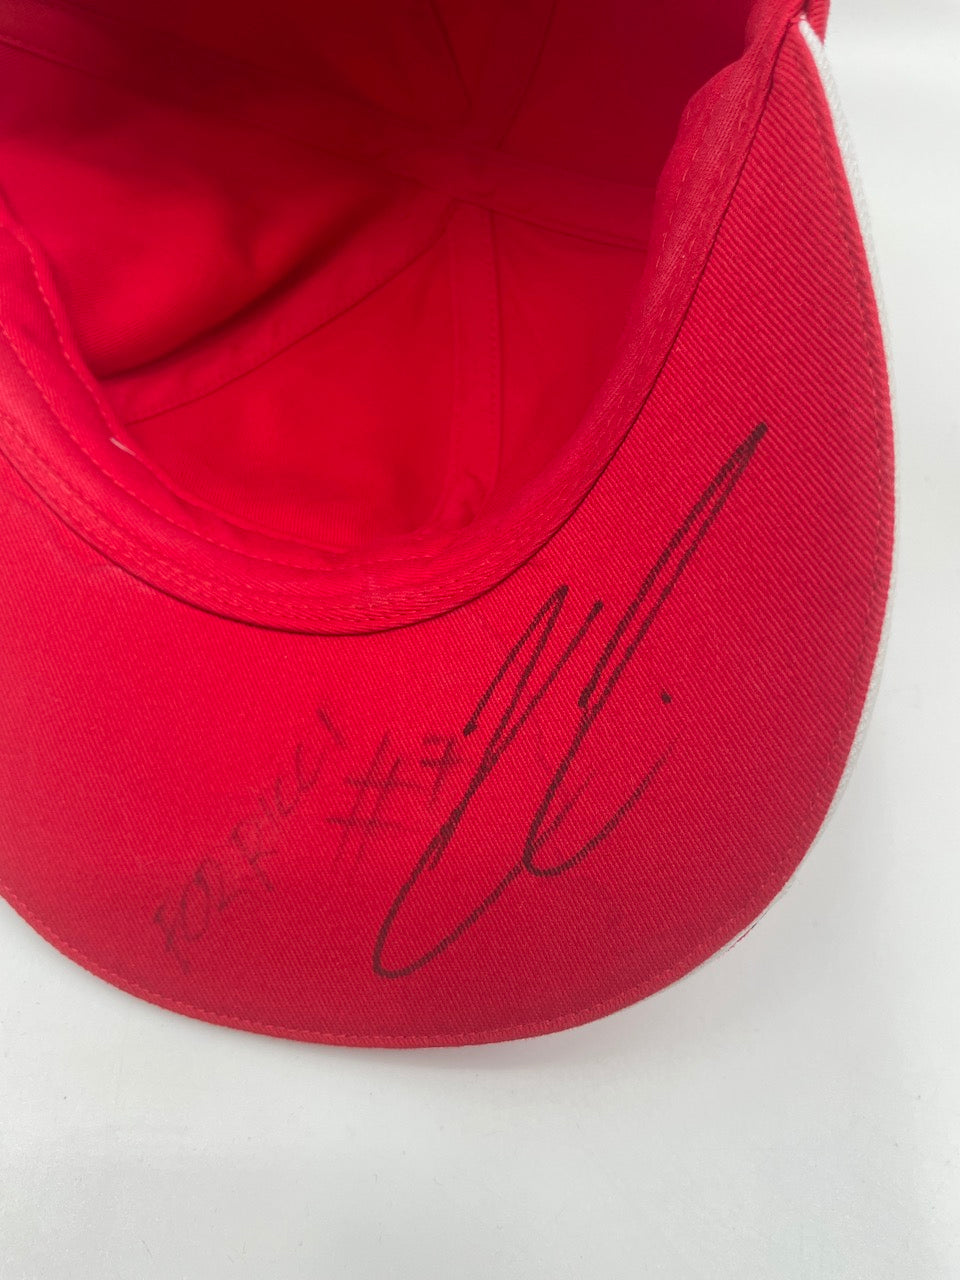 Bayern München Trikot Ludwig Kögl signiert Autogramme COA Adidas M